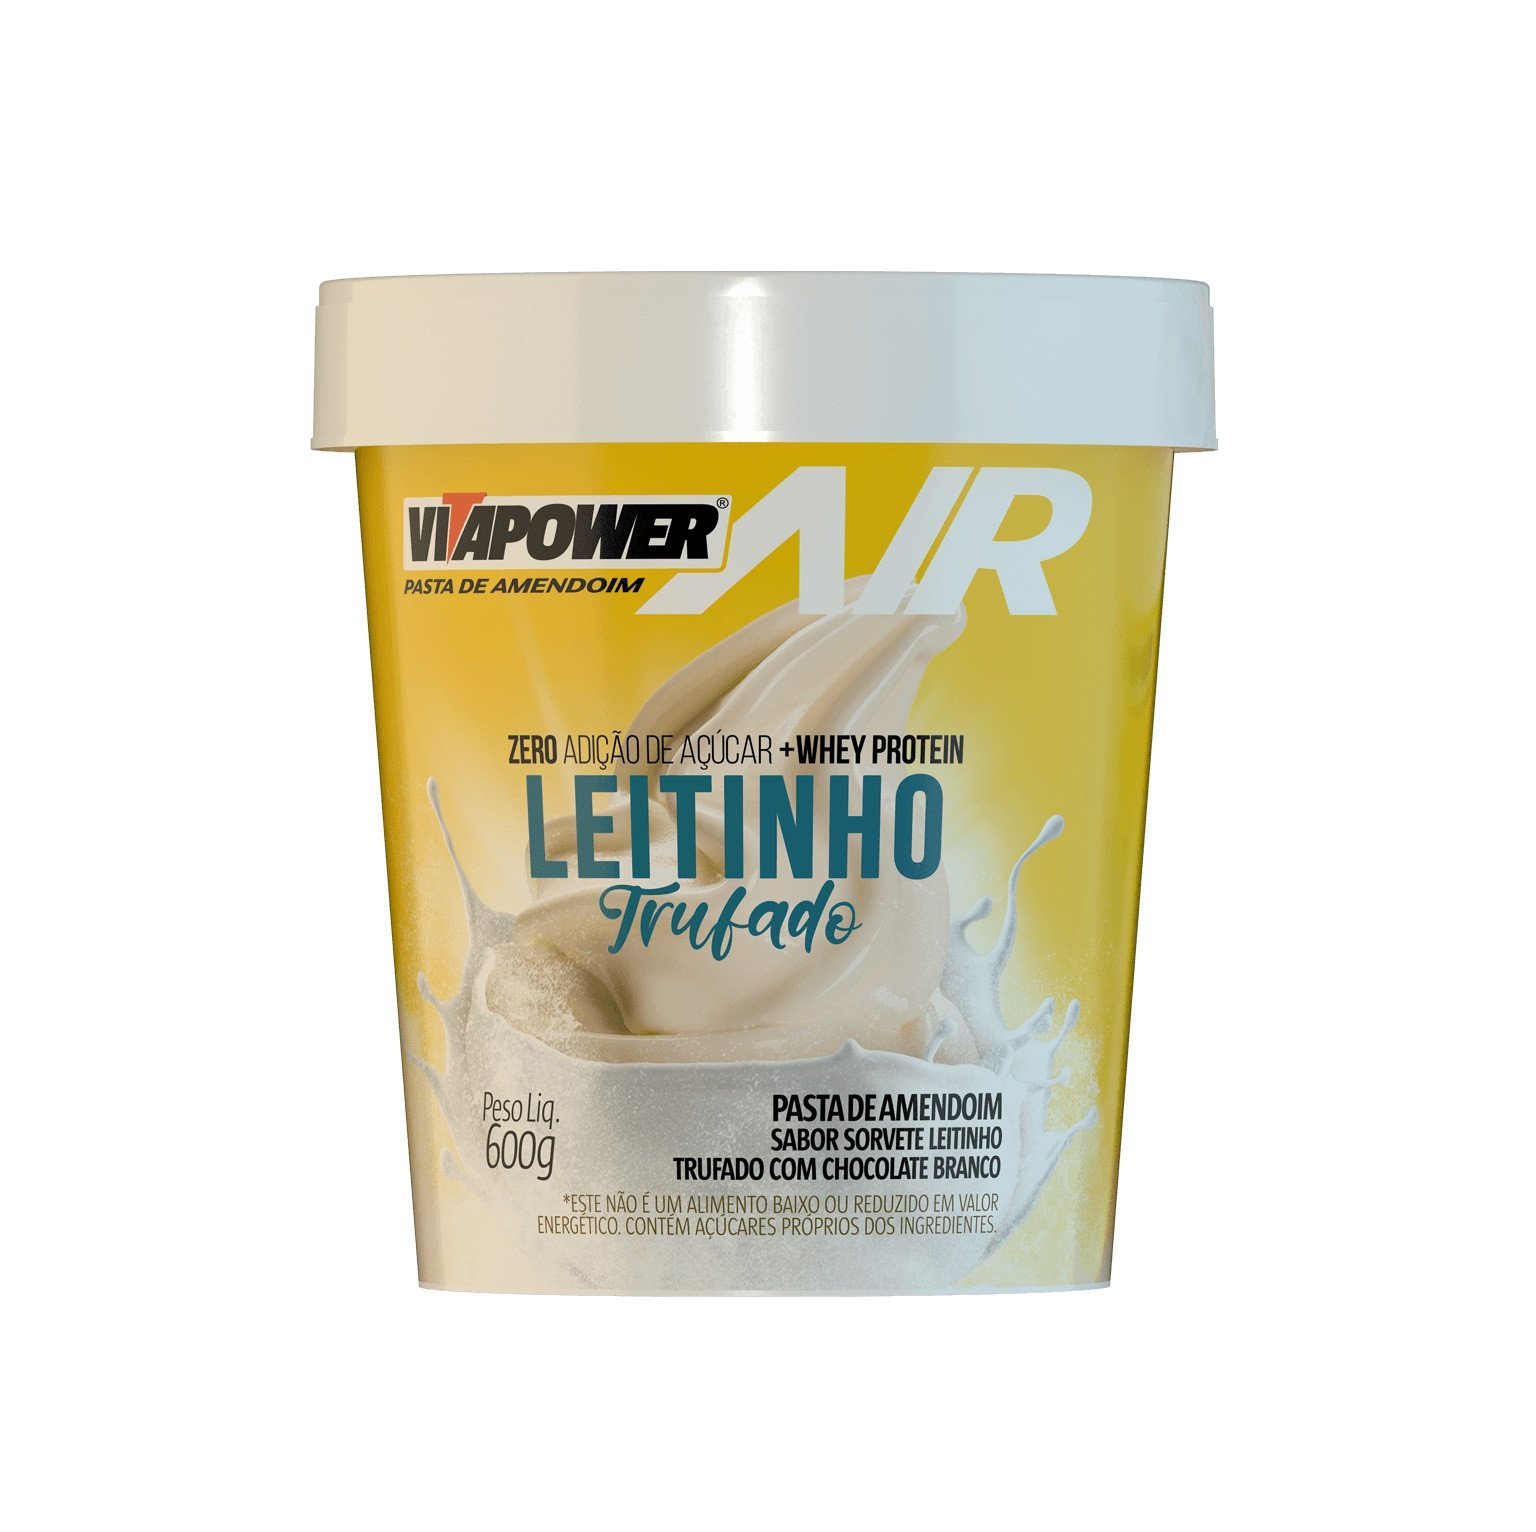 Pasta De Amendoim Integral Leitininho C Whey Protein 1.005g